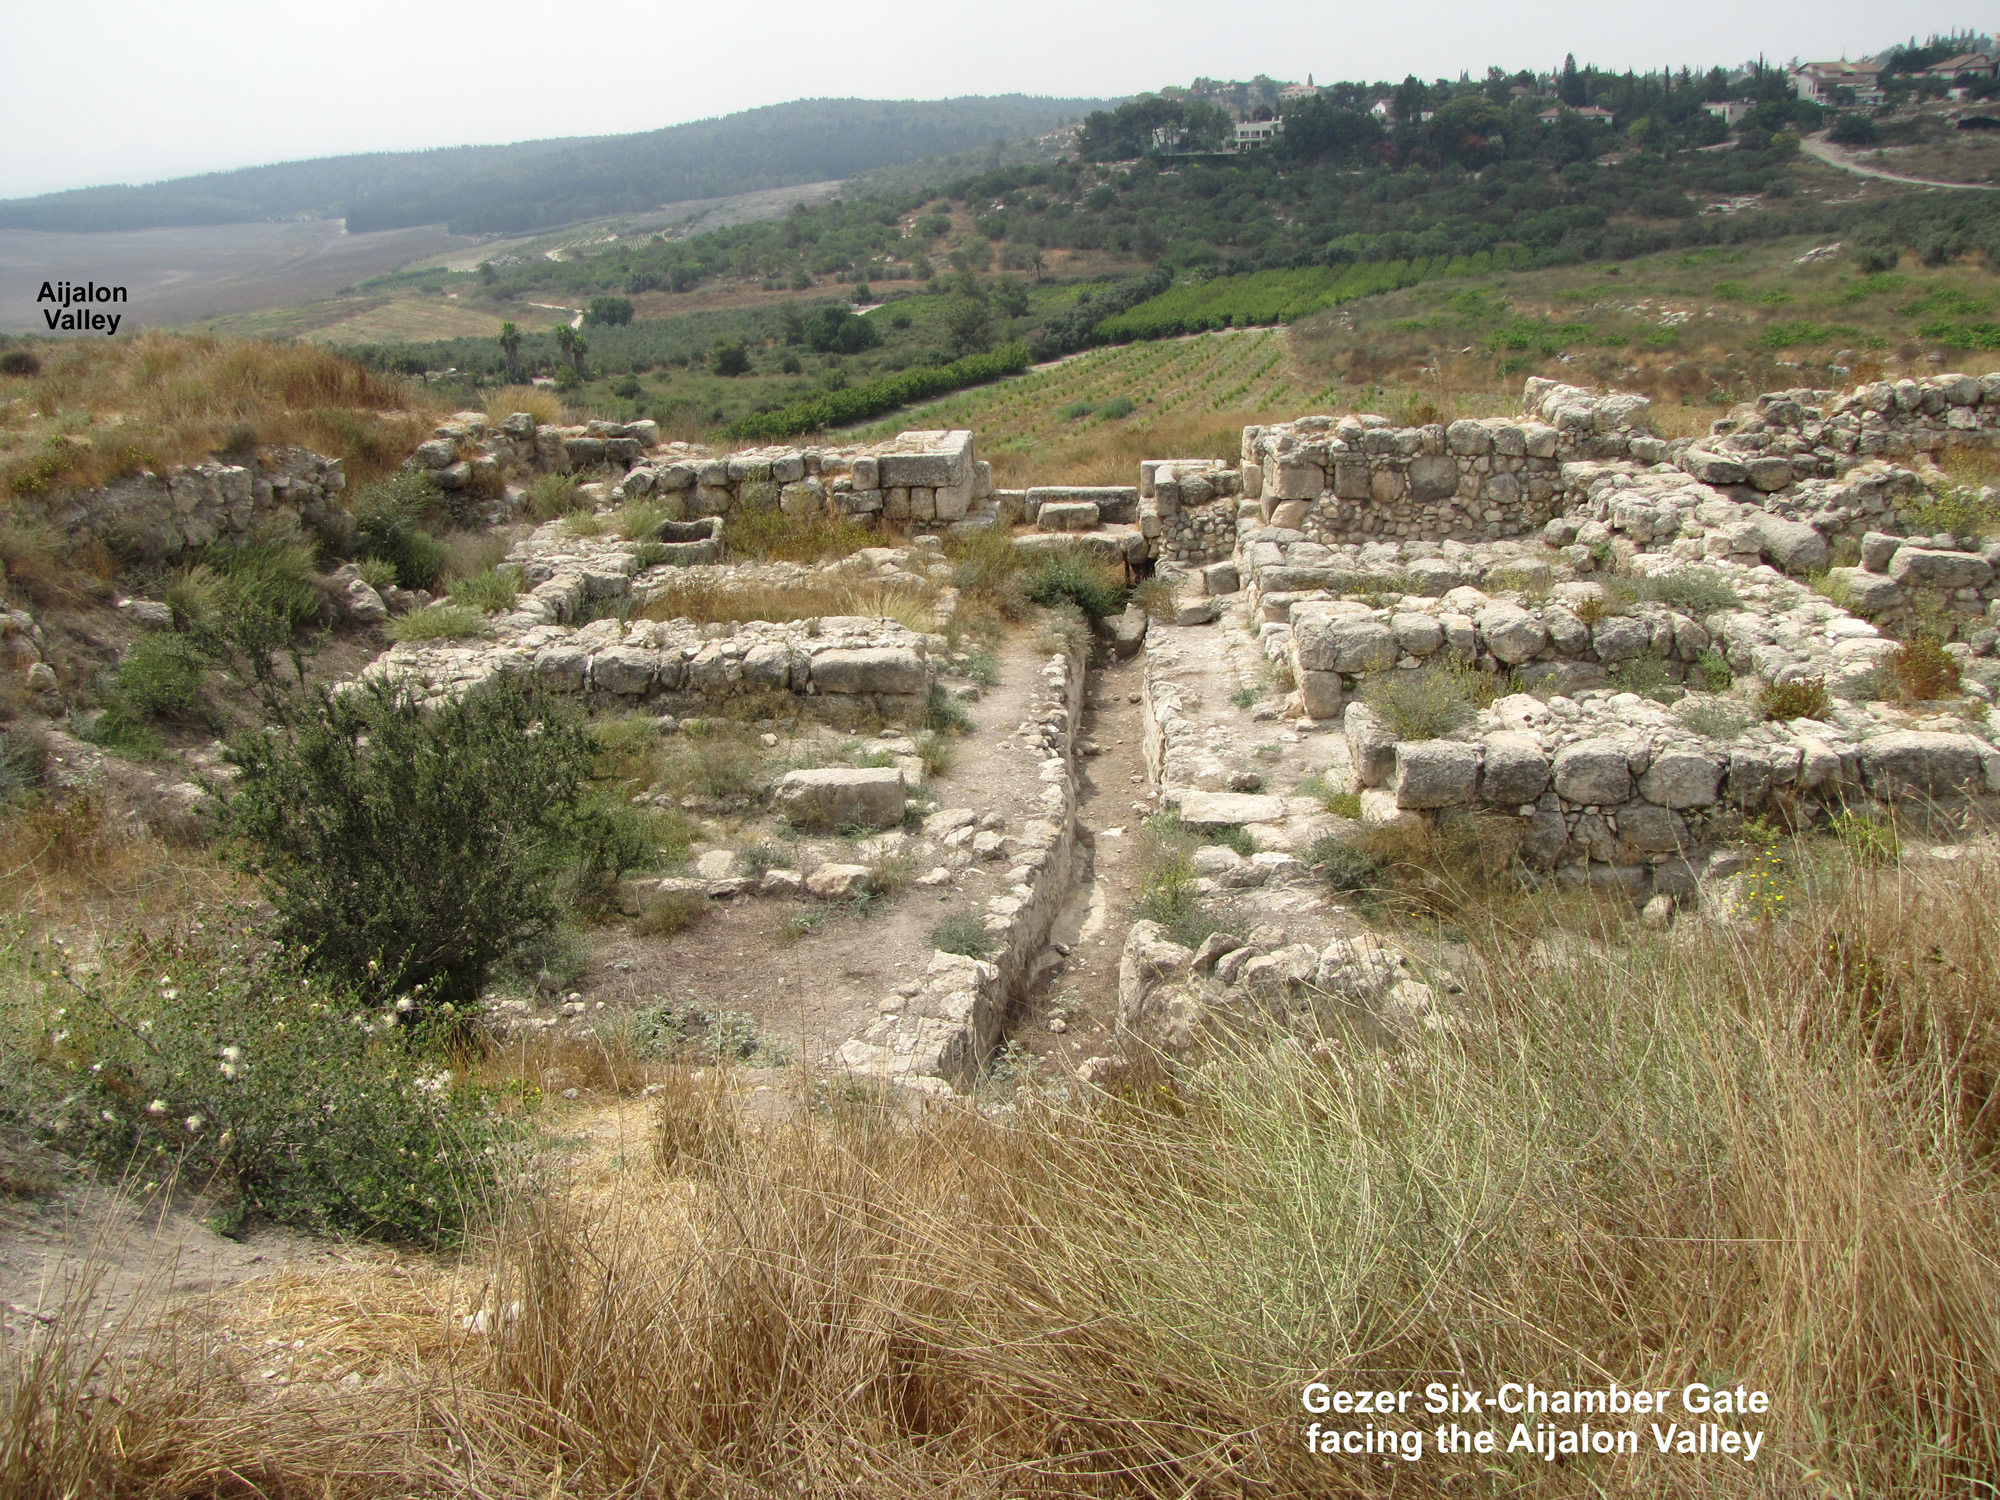 Gezer six-chamber Gate of Solomon